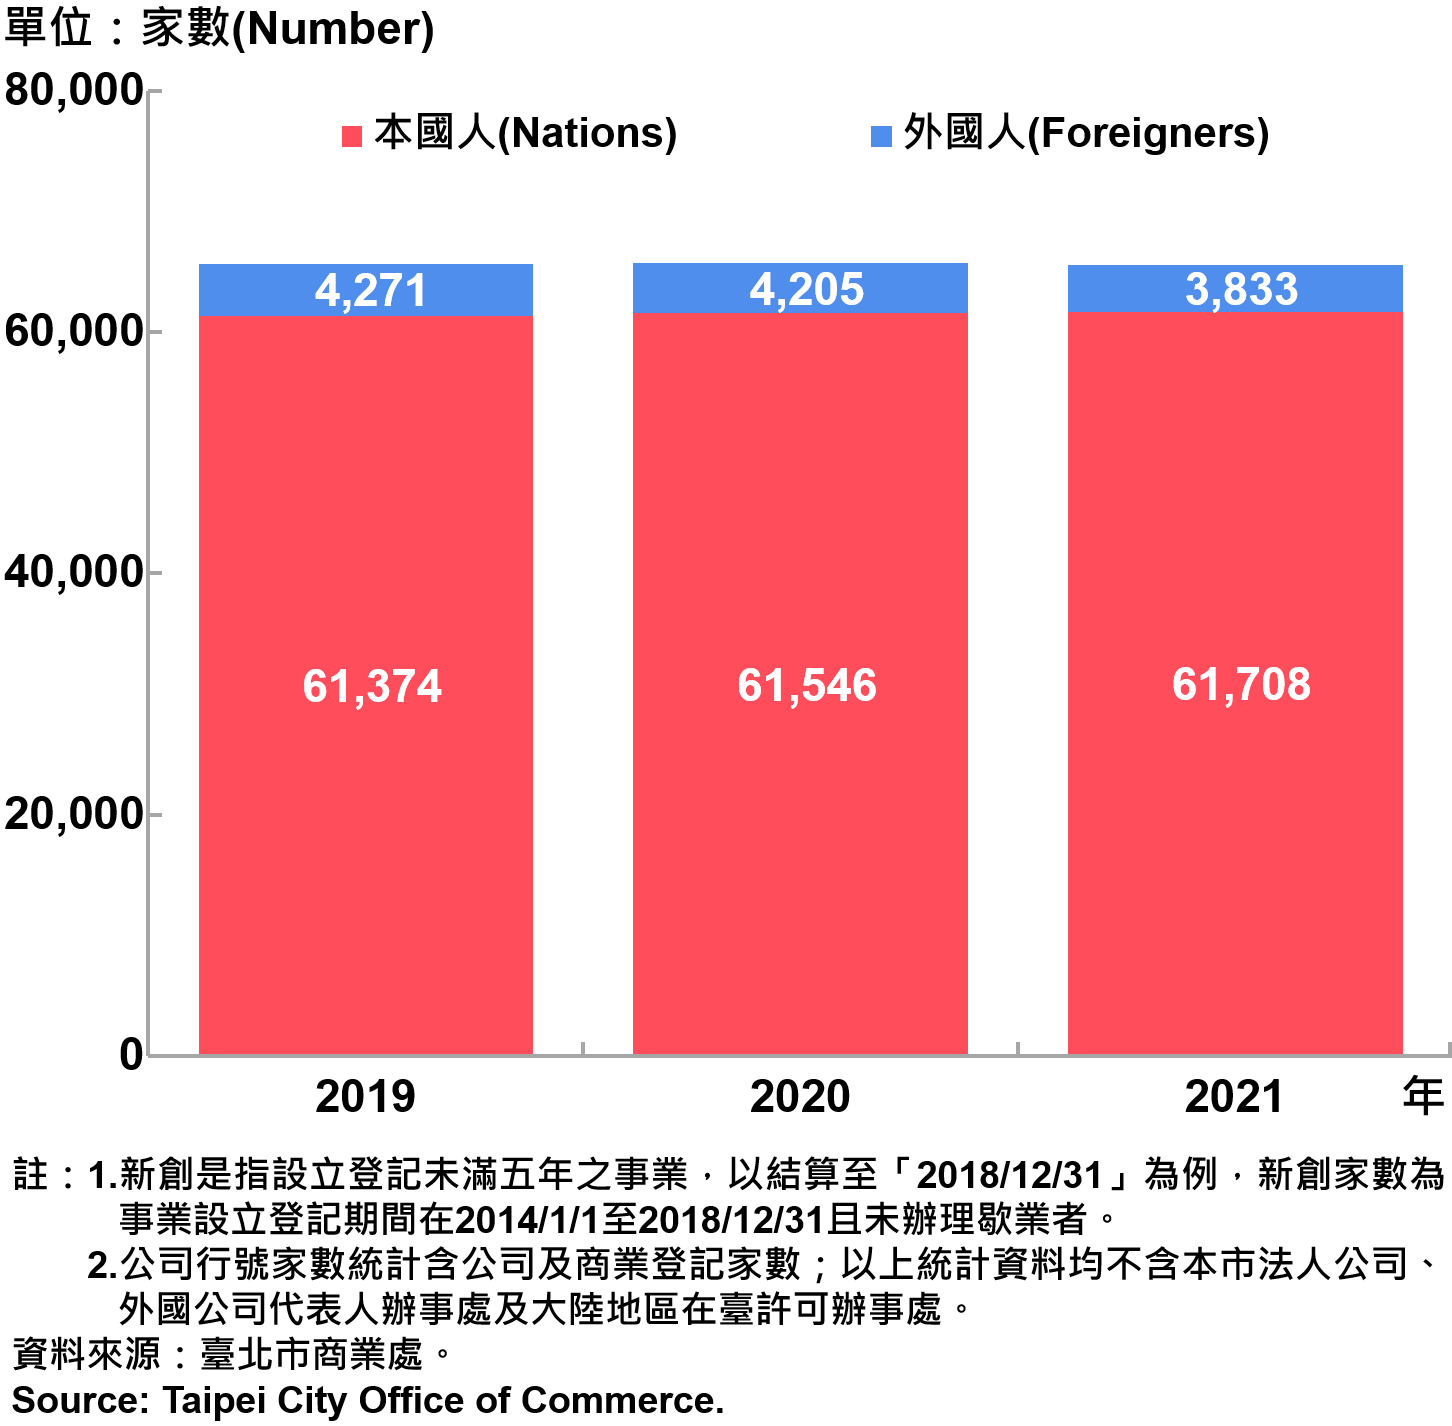 臺北市新創公司行號負責人-本國人與外國人分布情形-現存家數—2021 Responsible Person of Newly Registered Companies In Taipei City by Nationality - Number of Current—2021